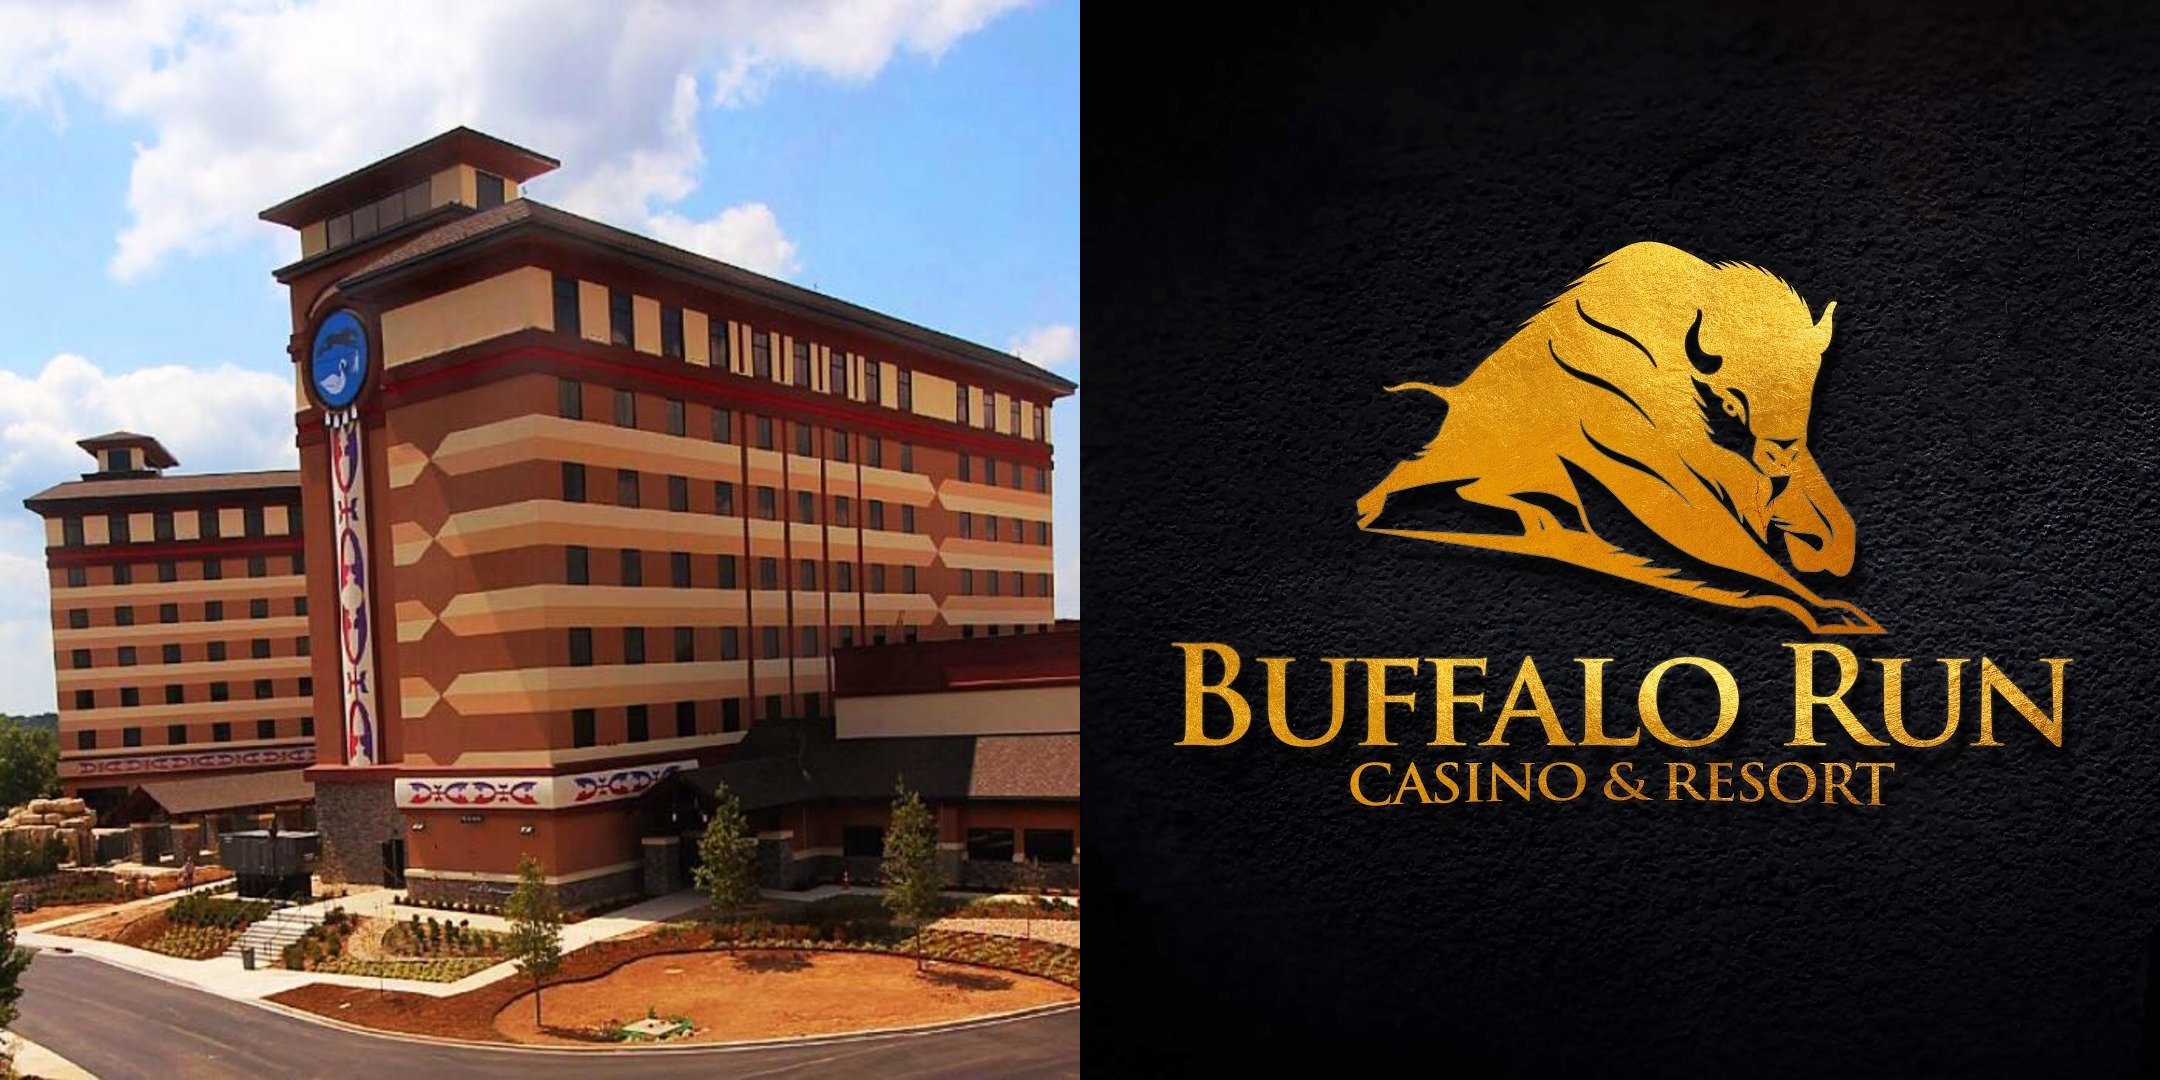 Buffalo run casino concert schedule for today